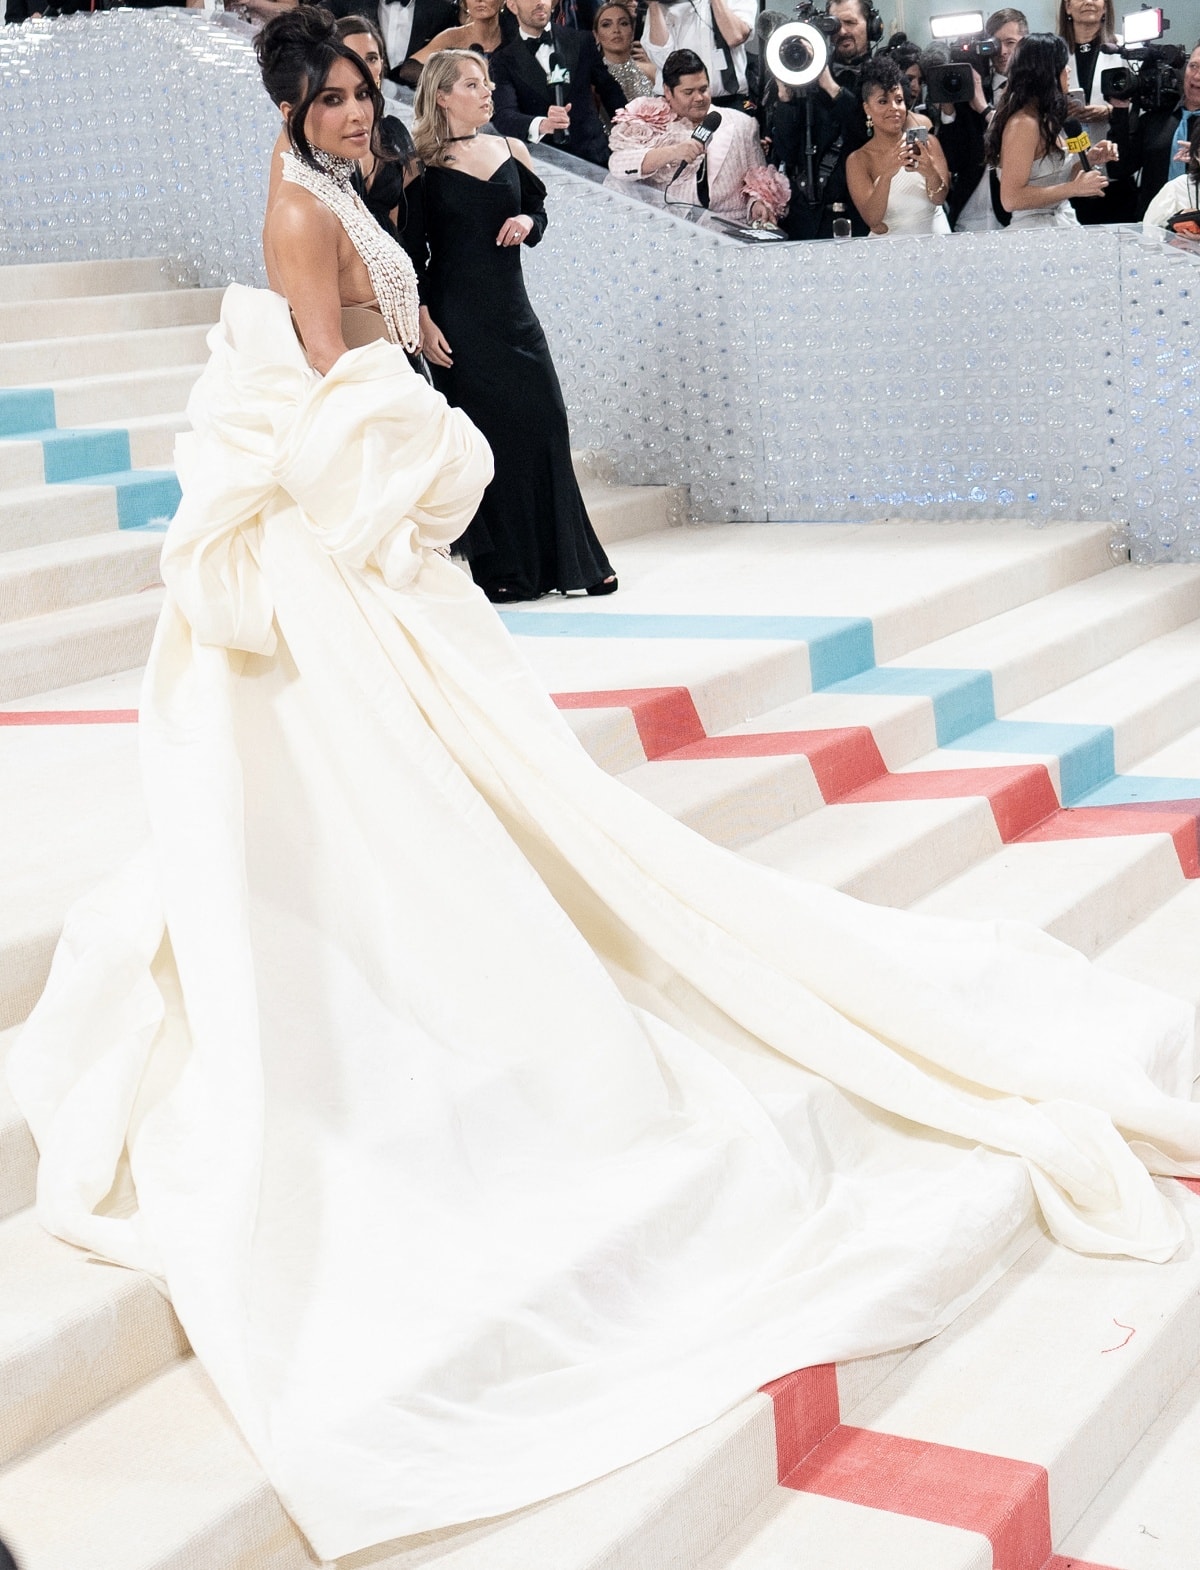 Kim Kardashian wore a custom Schiaparelli Haute Couture look complete with a dramatic white stole